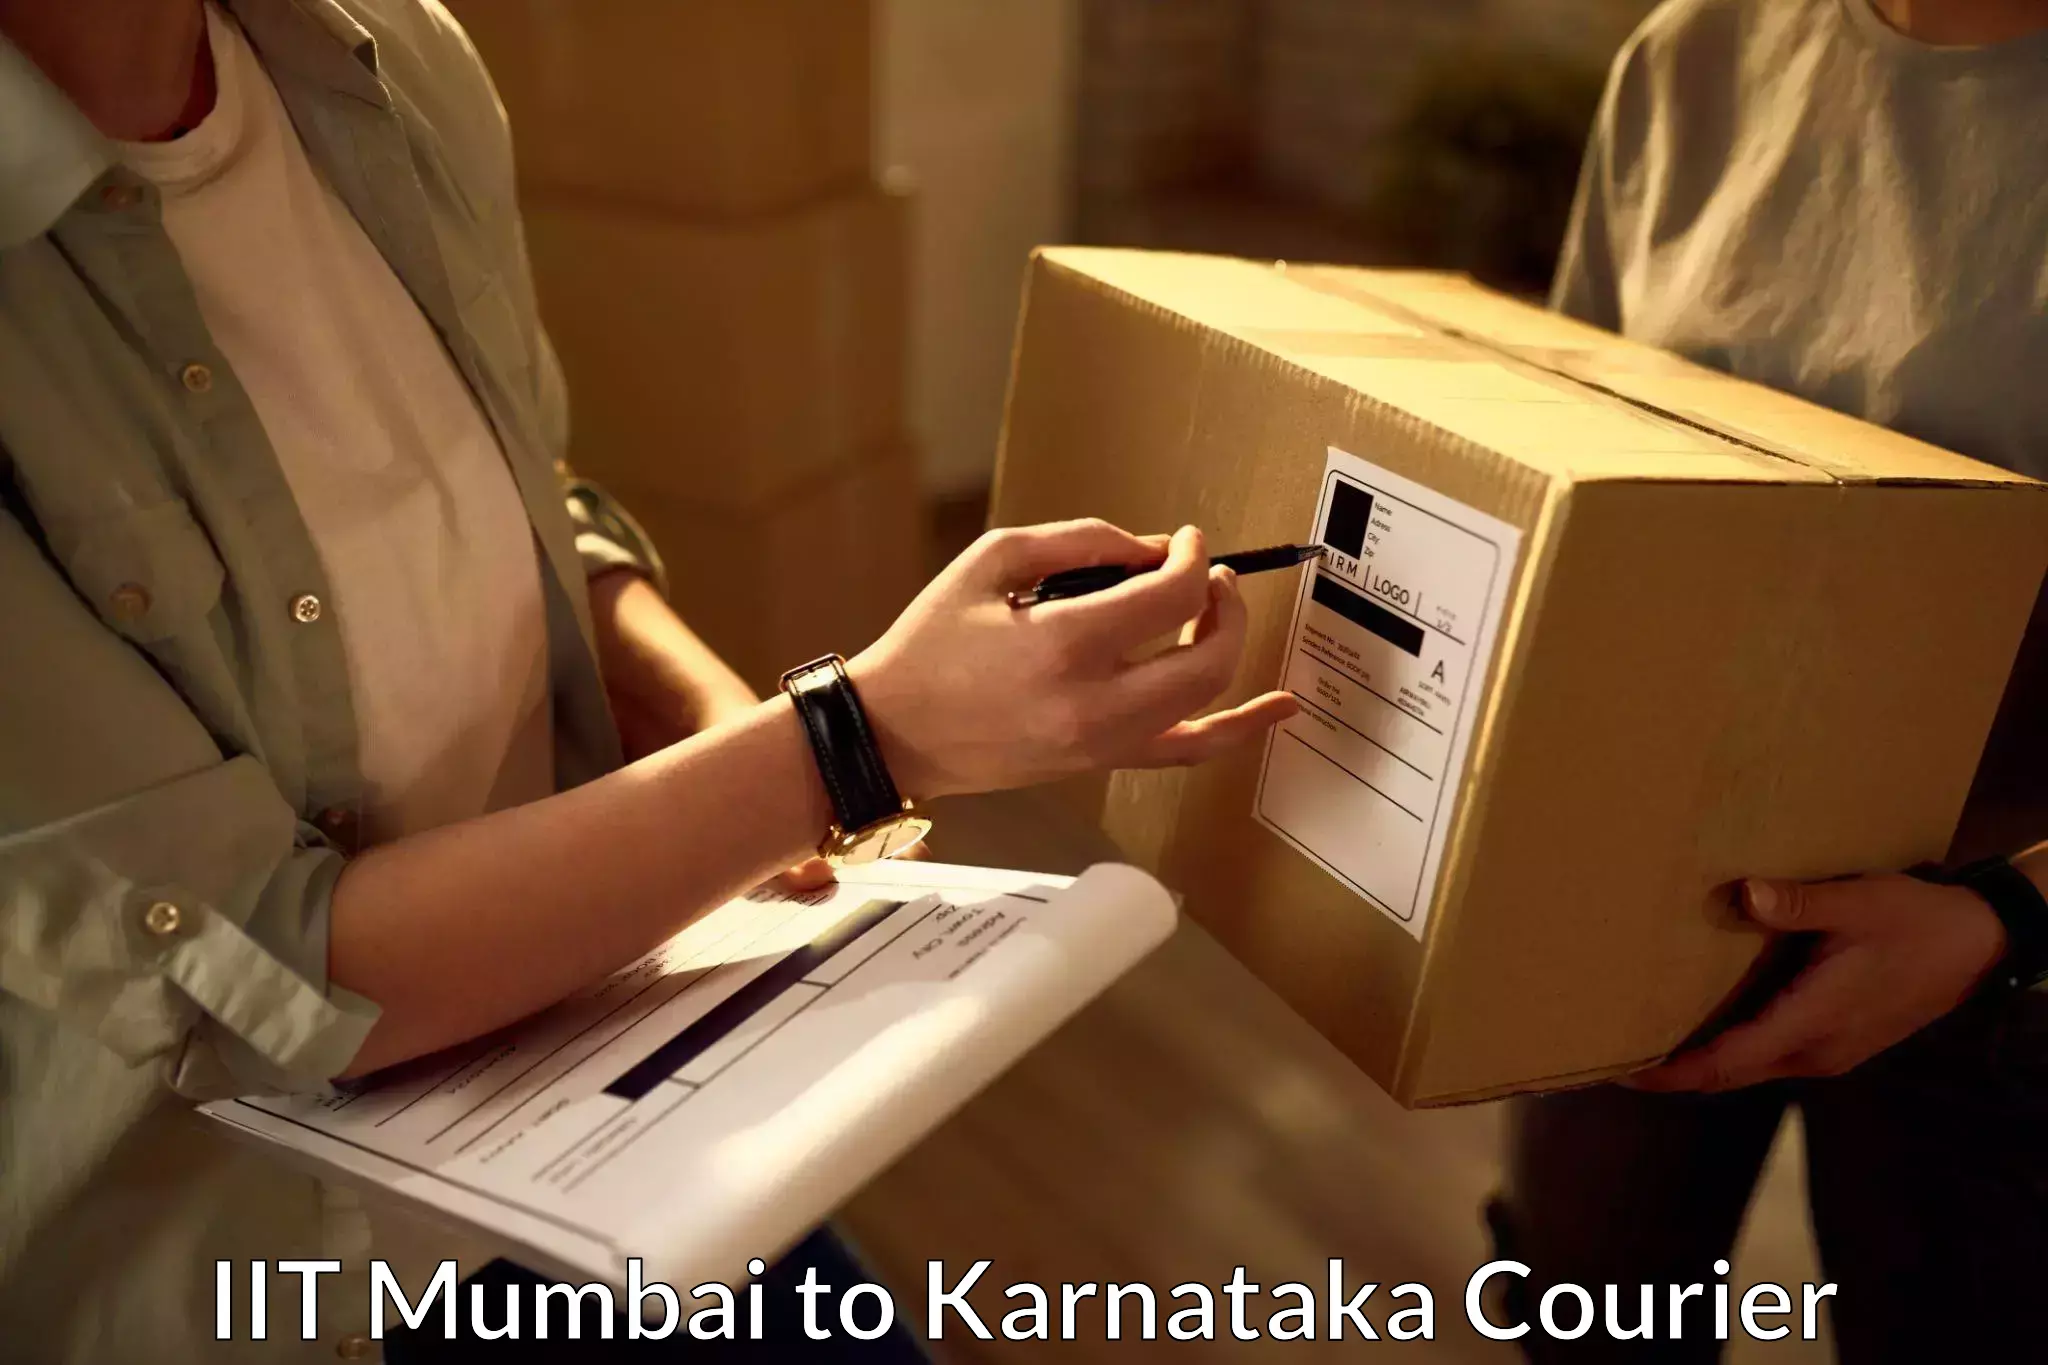 Urban courier service IIT Mumbai to Hubli